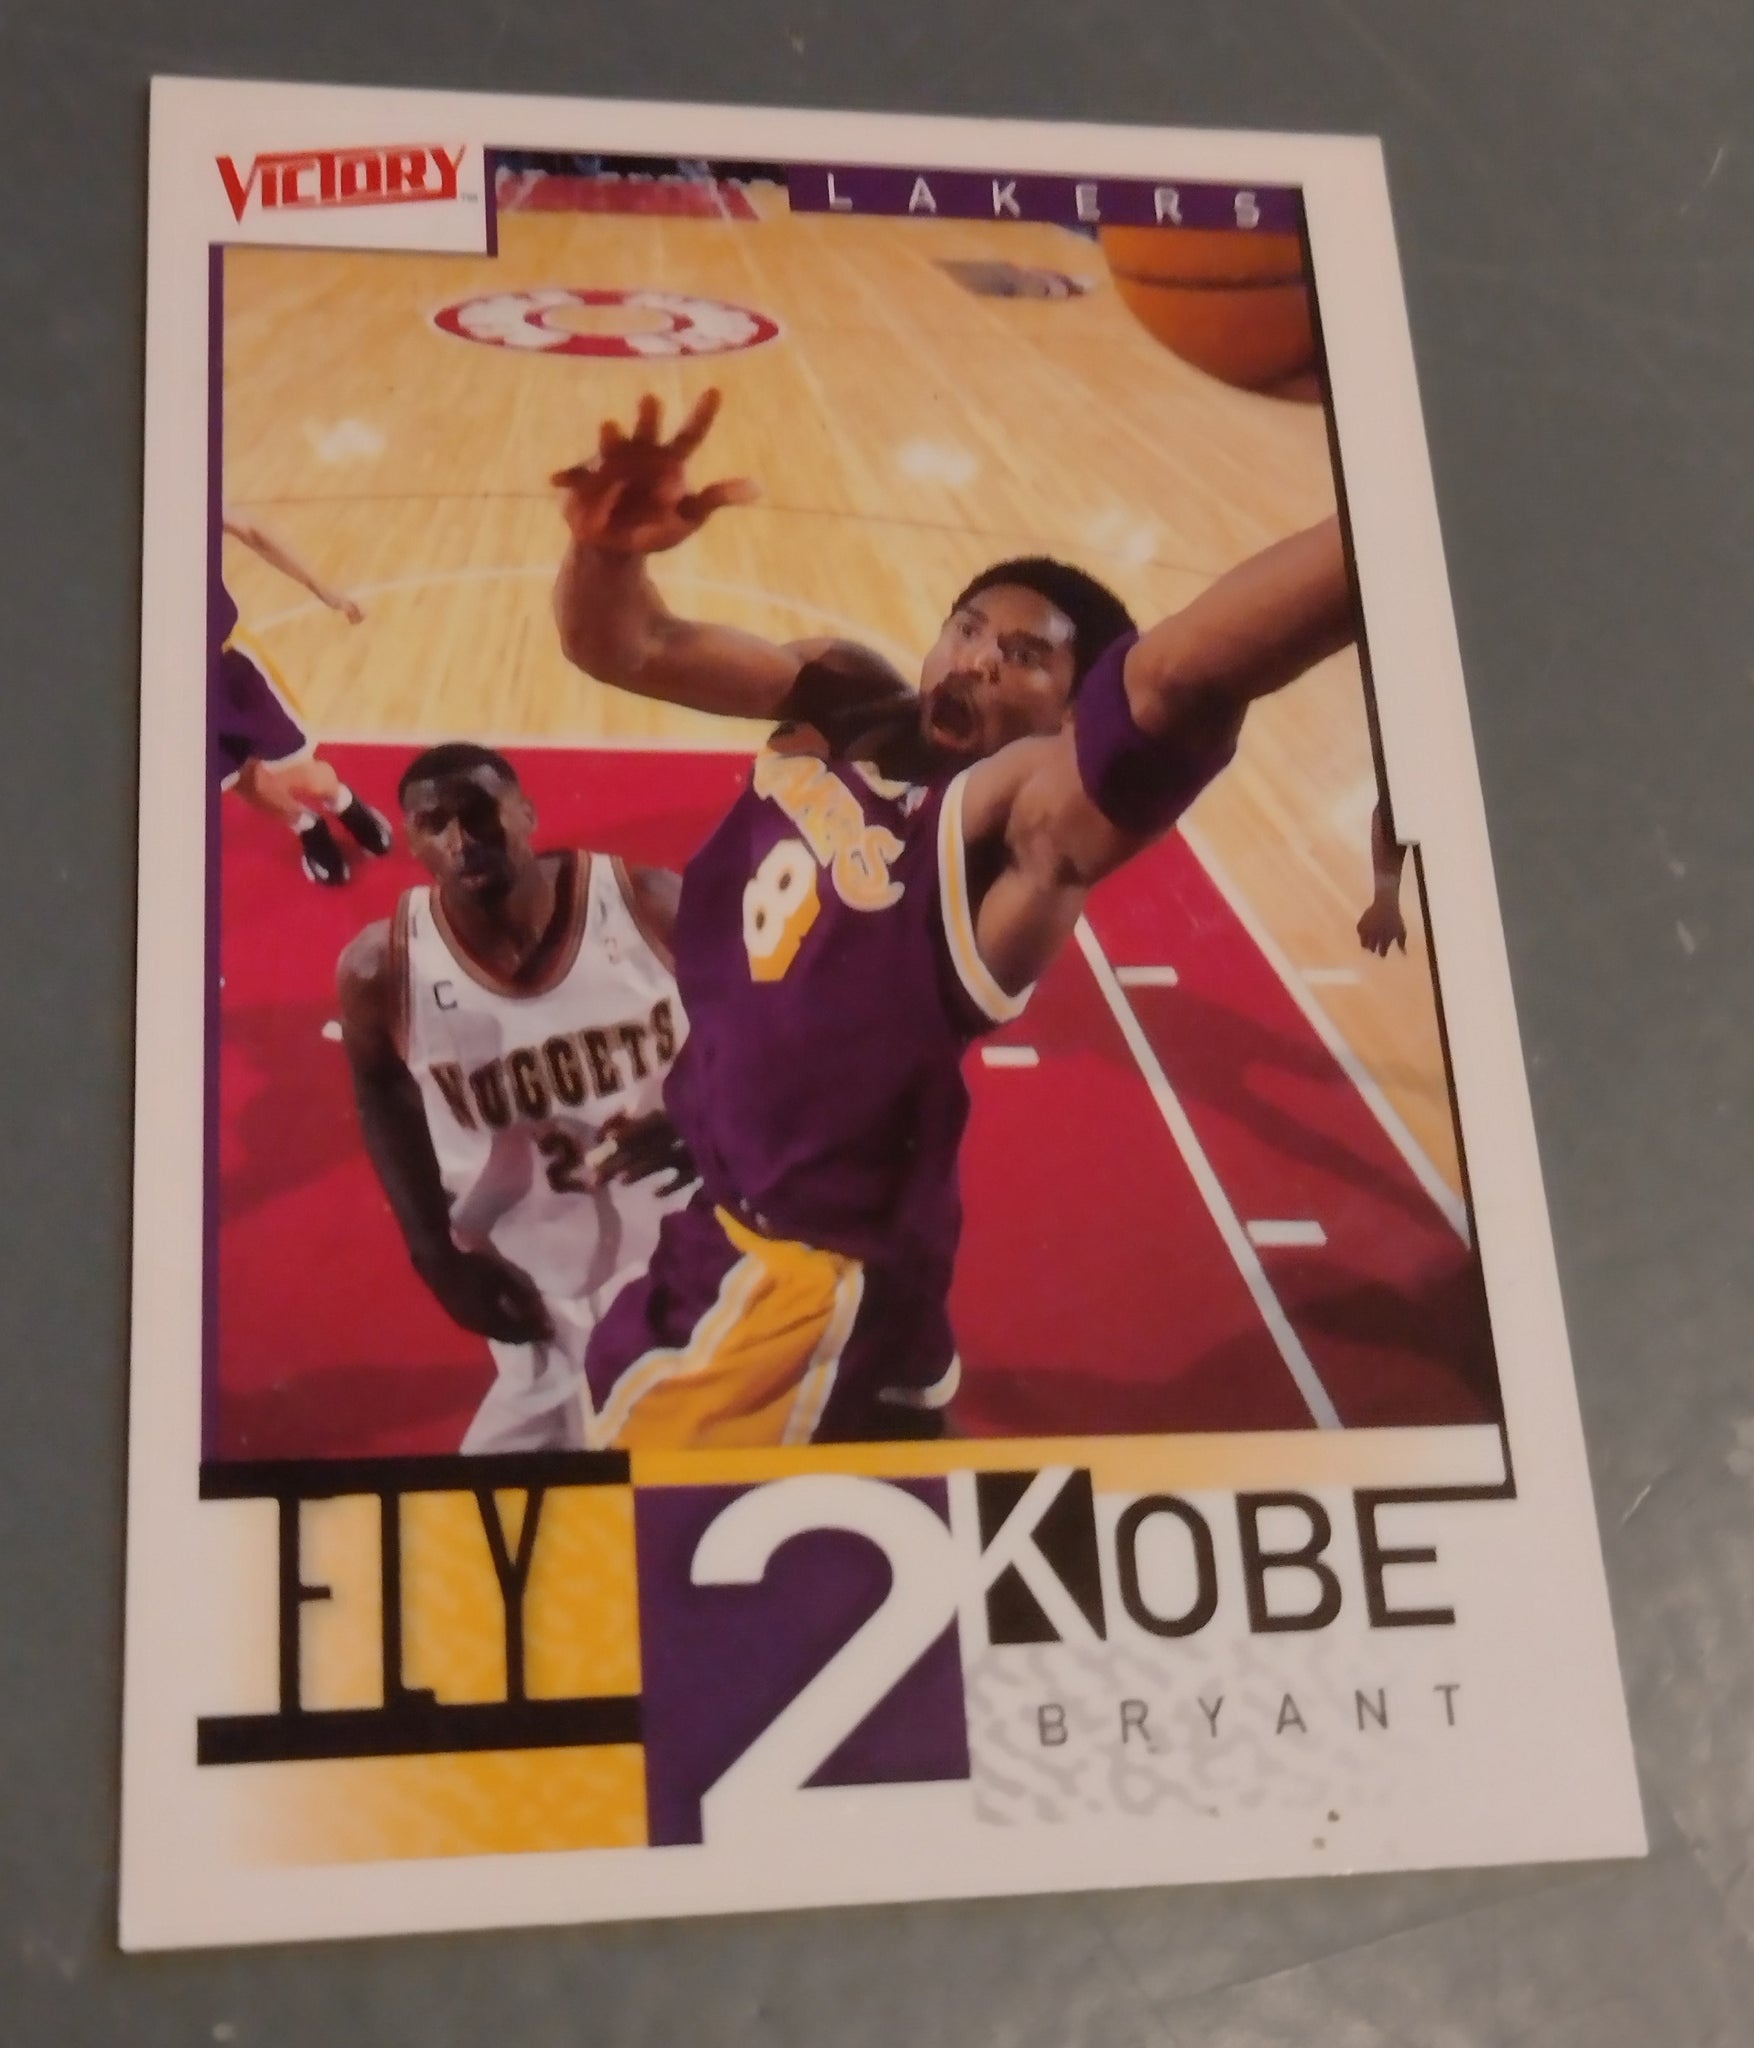 2000-01 Upper Deck Victory Kobe Bryant #296 Trading Card